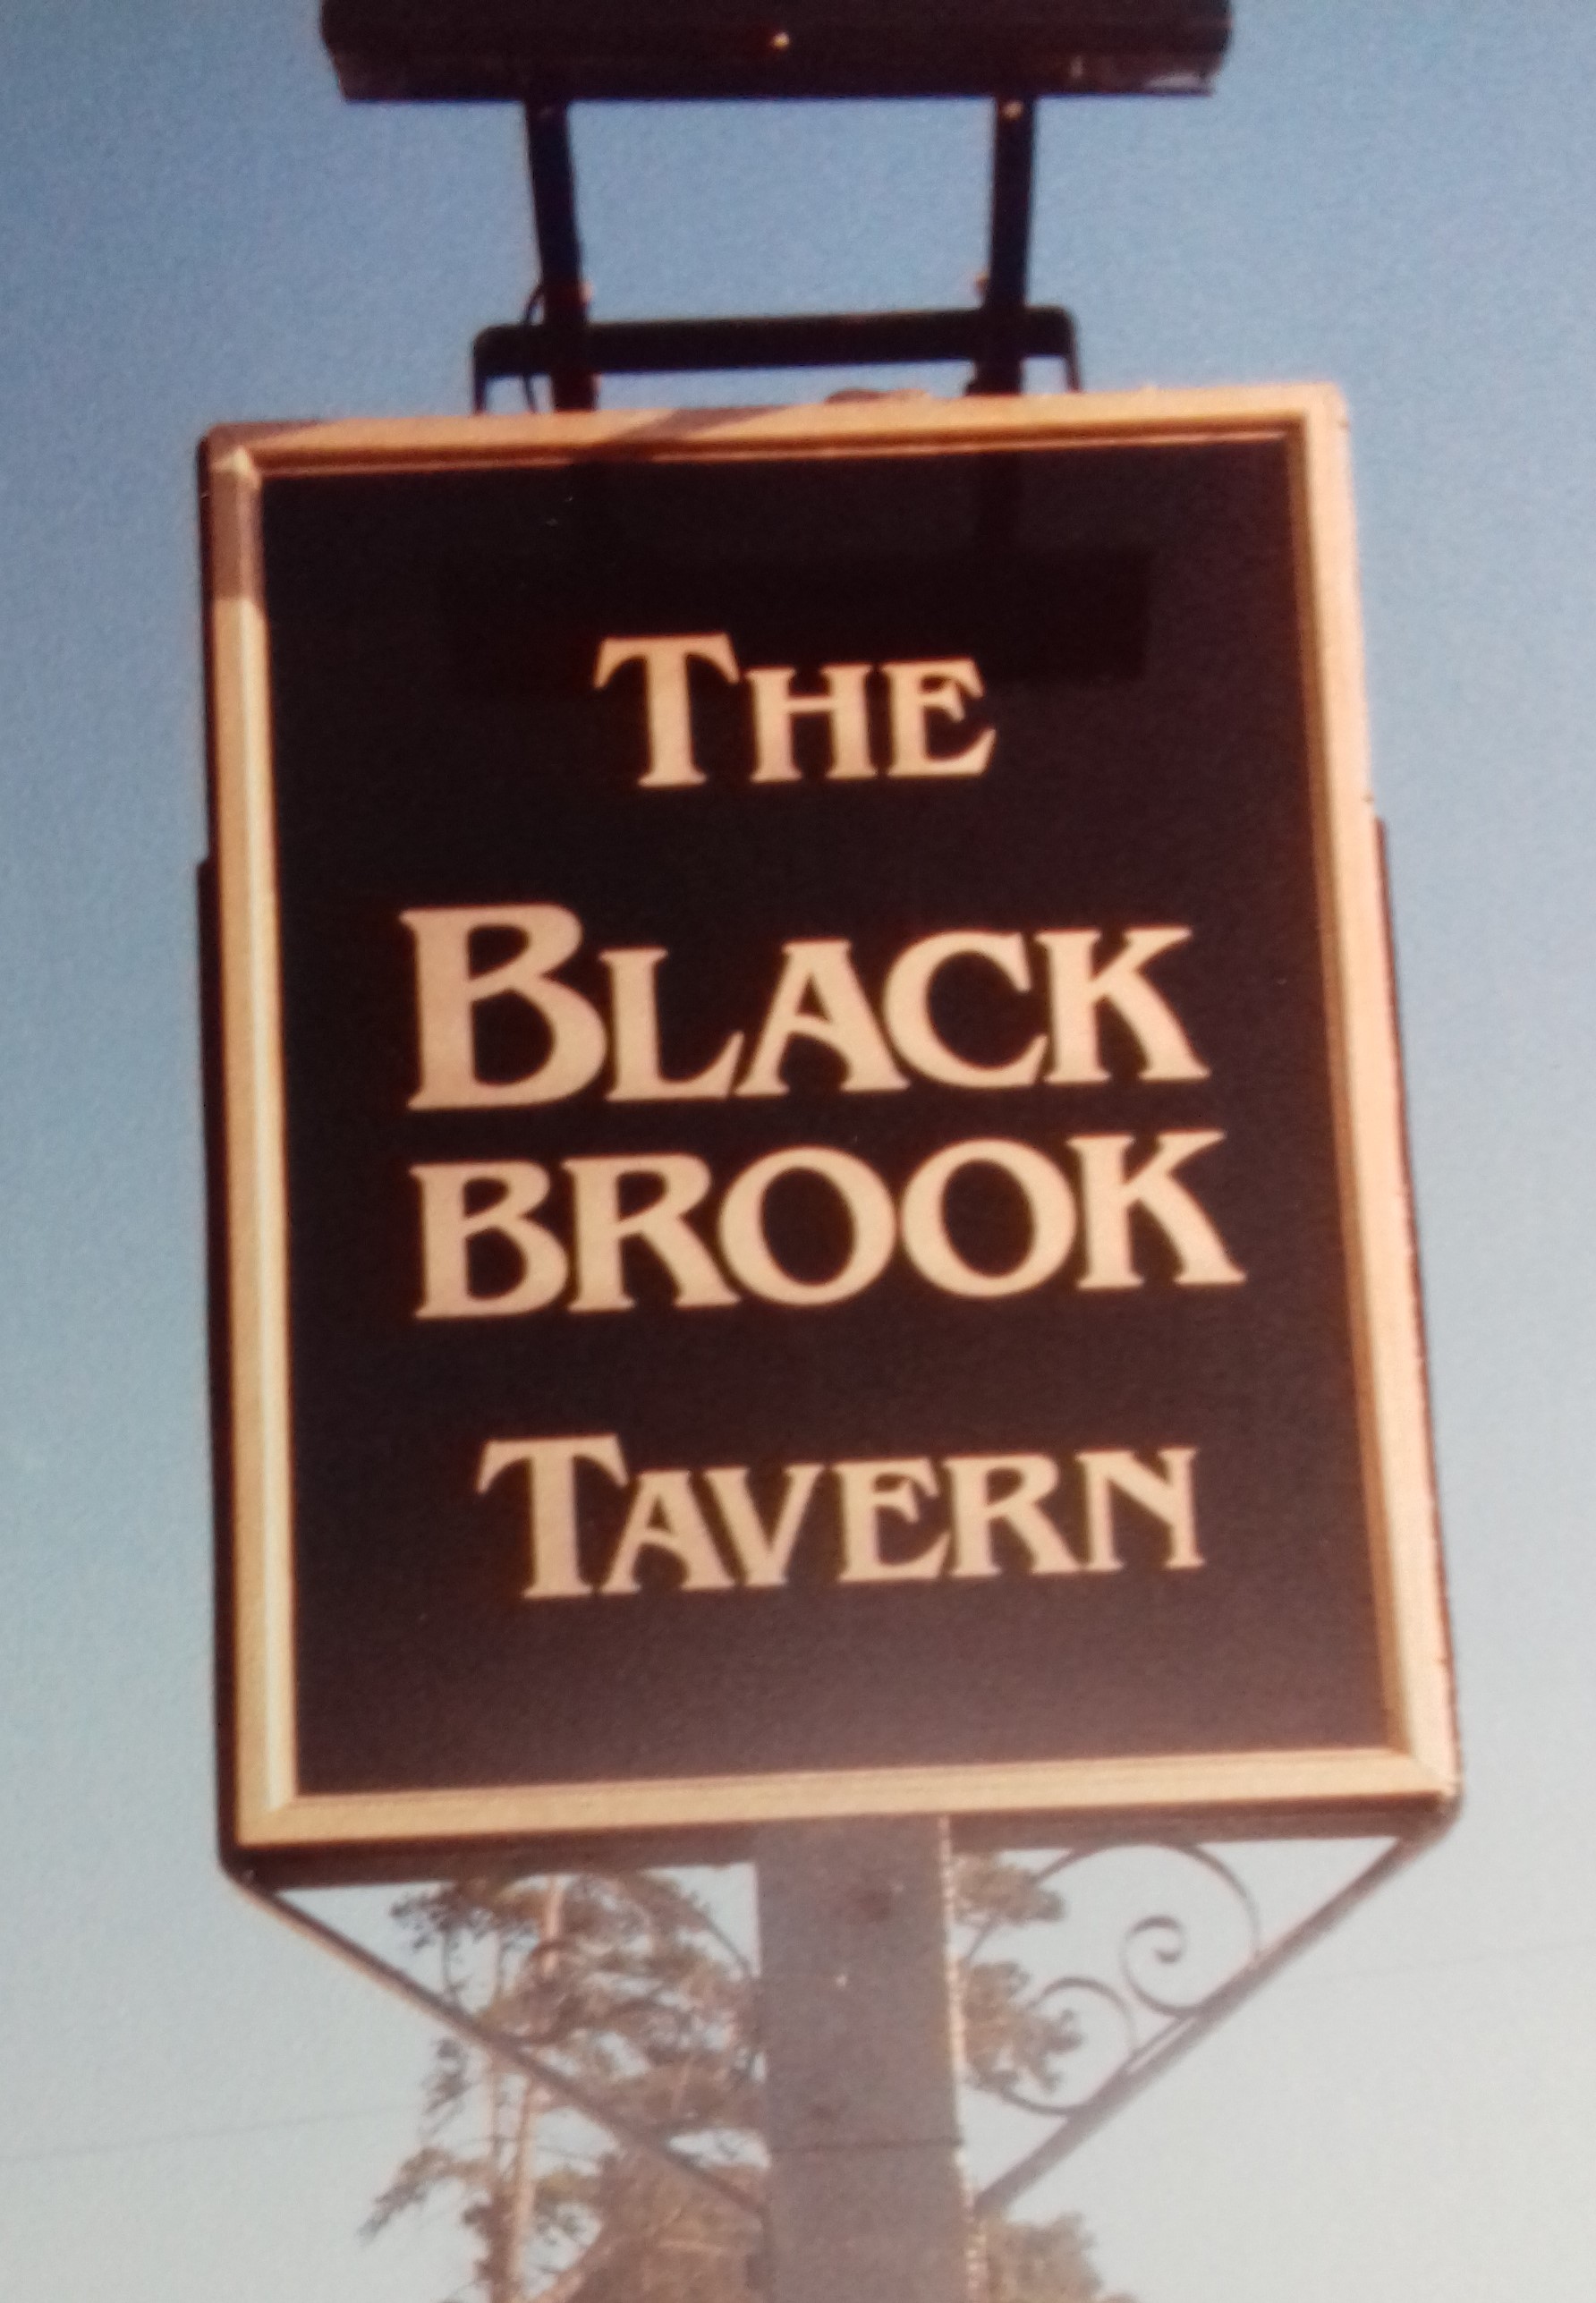 OLD SIGN: The Blackbrook Tavern